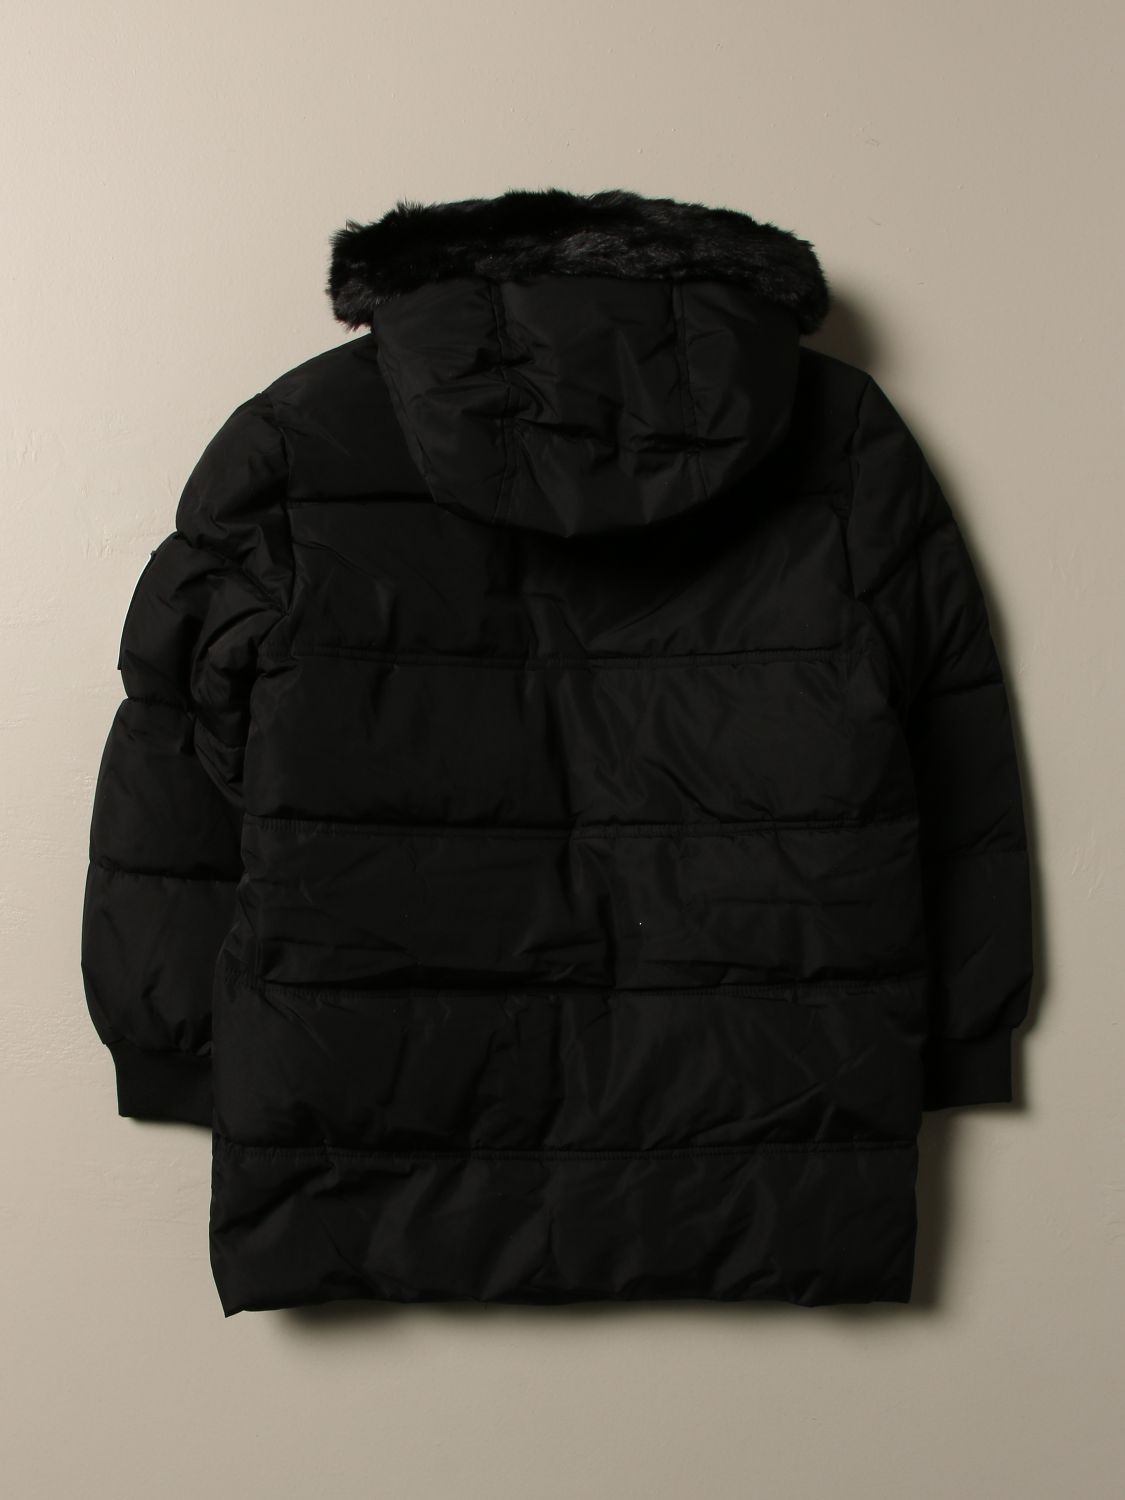 timberland jacket black